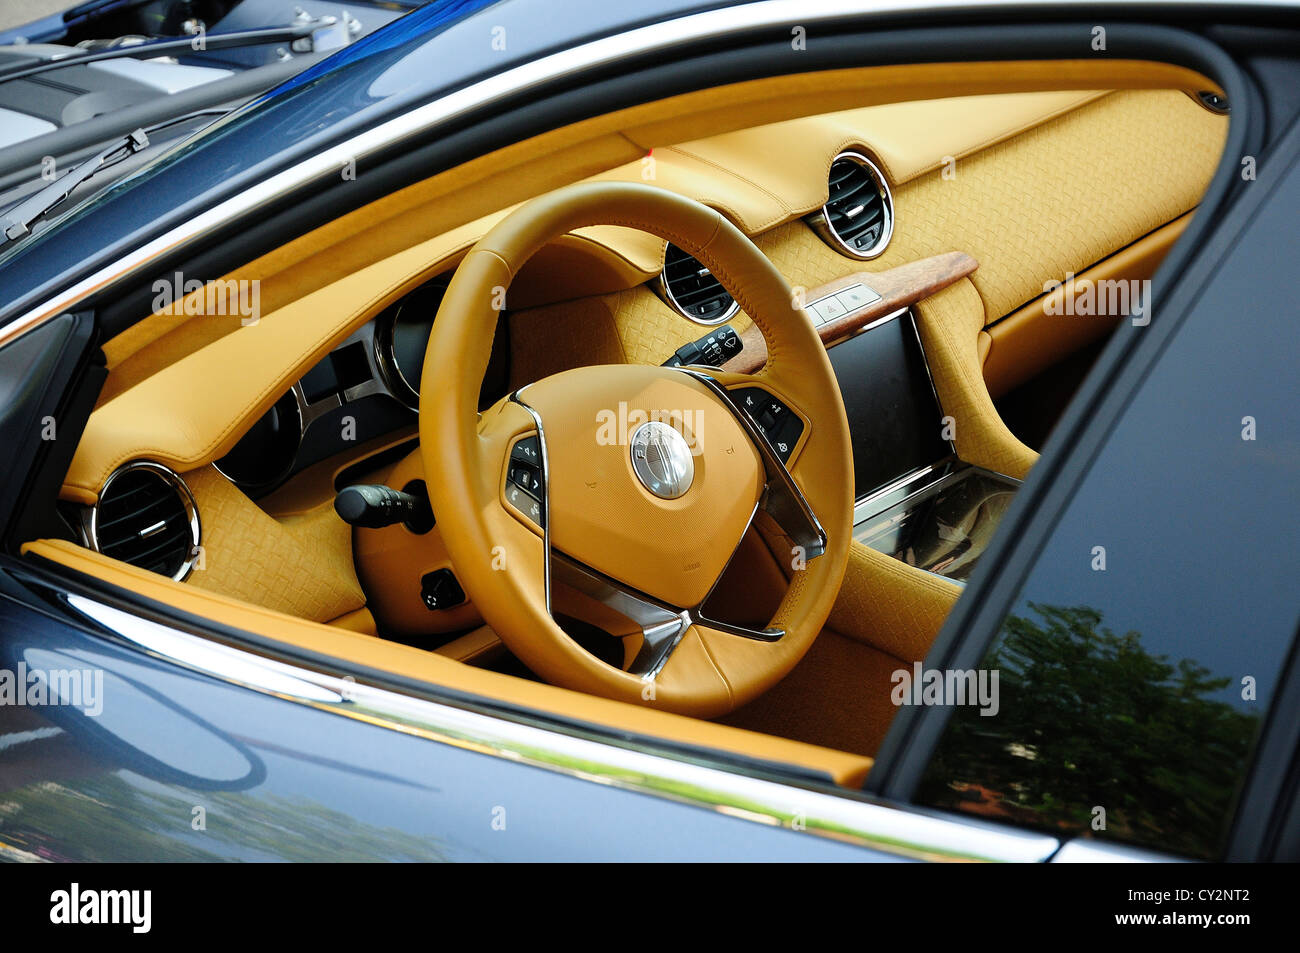 stock photo fisker karma electric car interior view